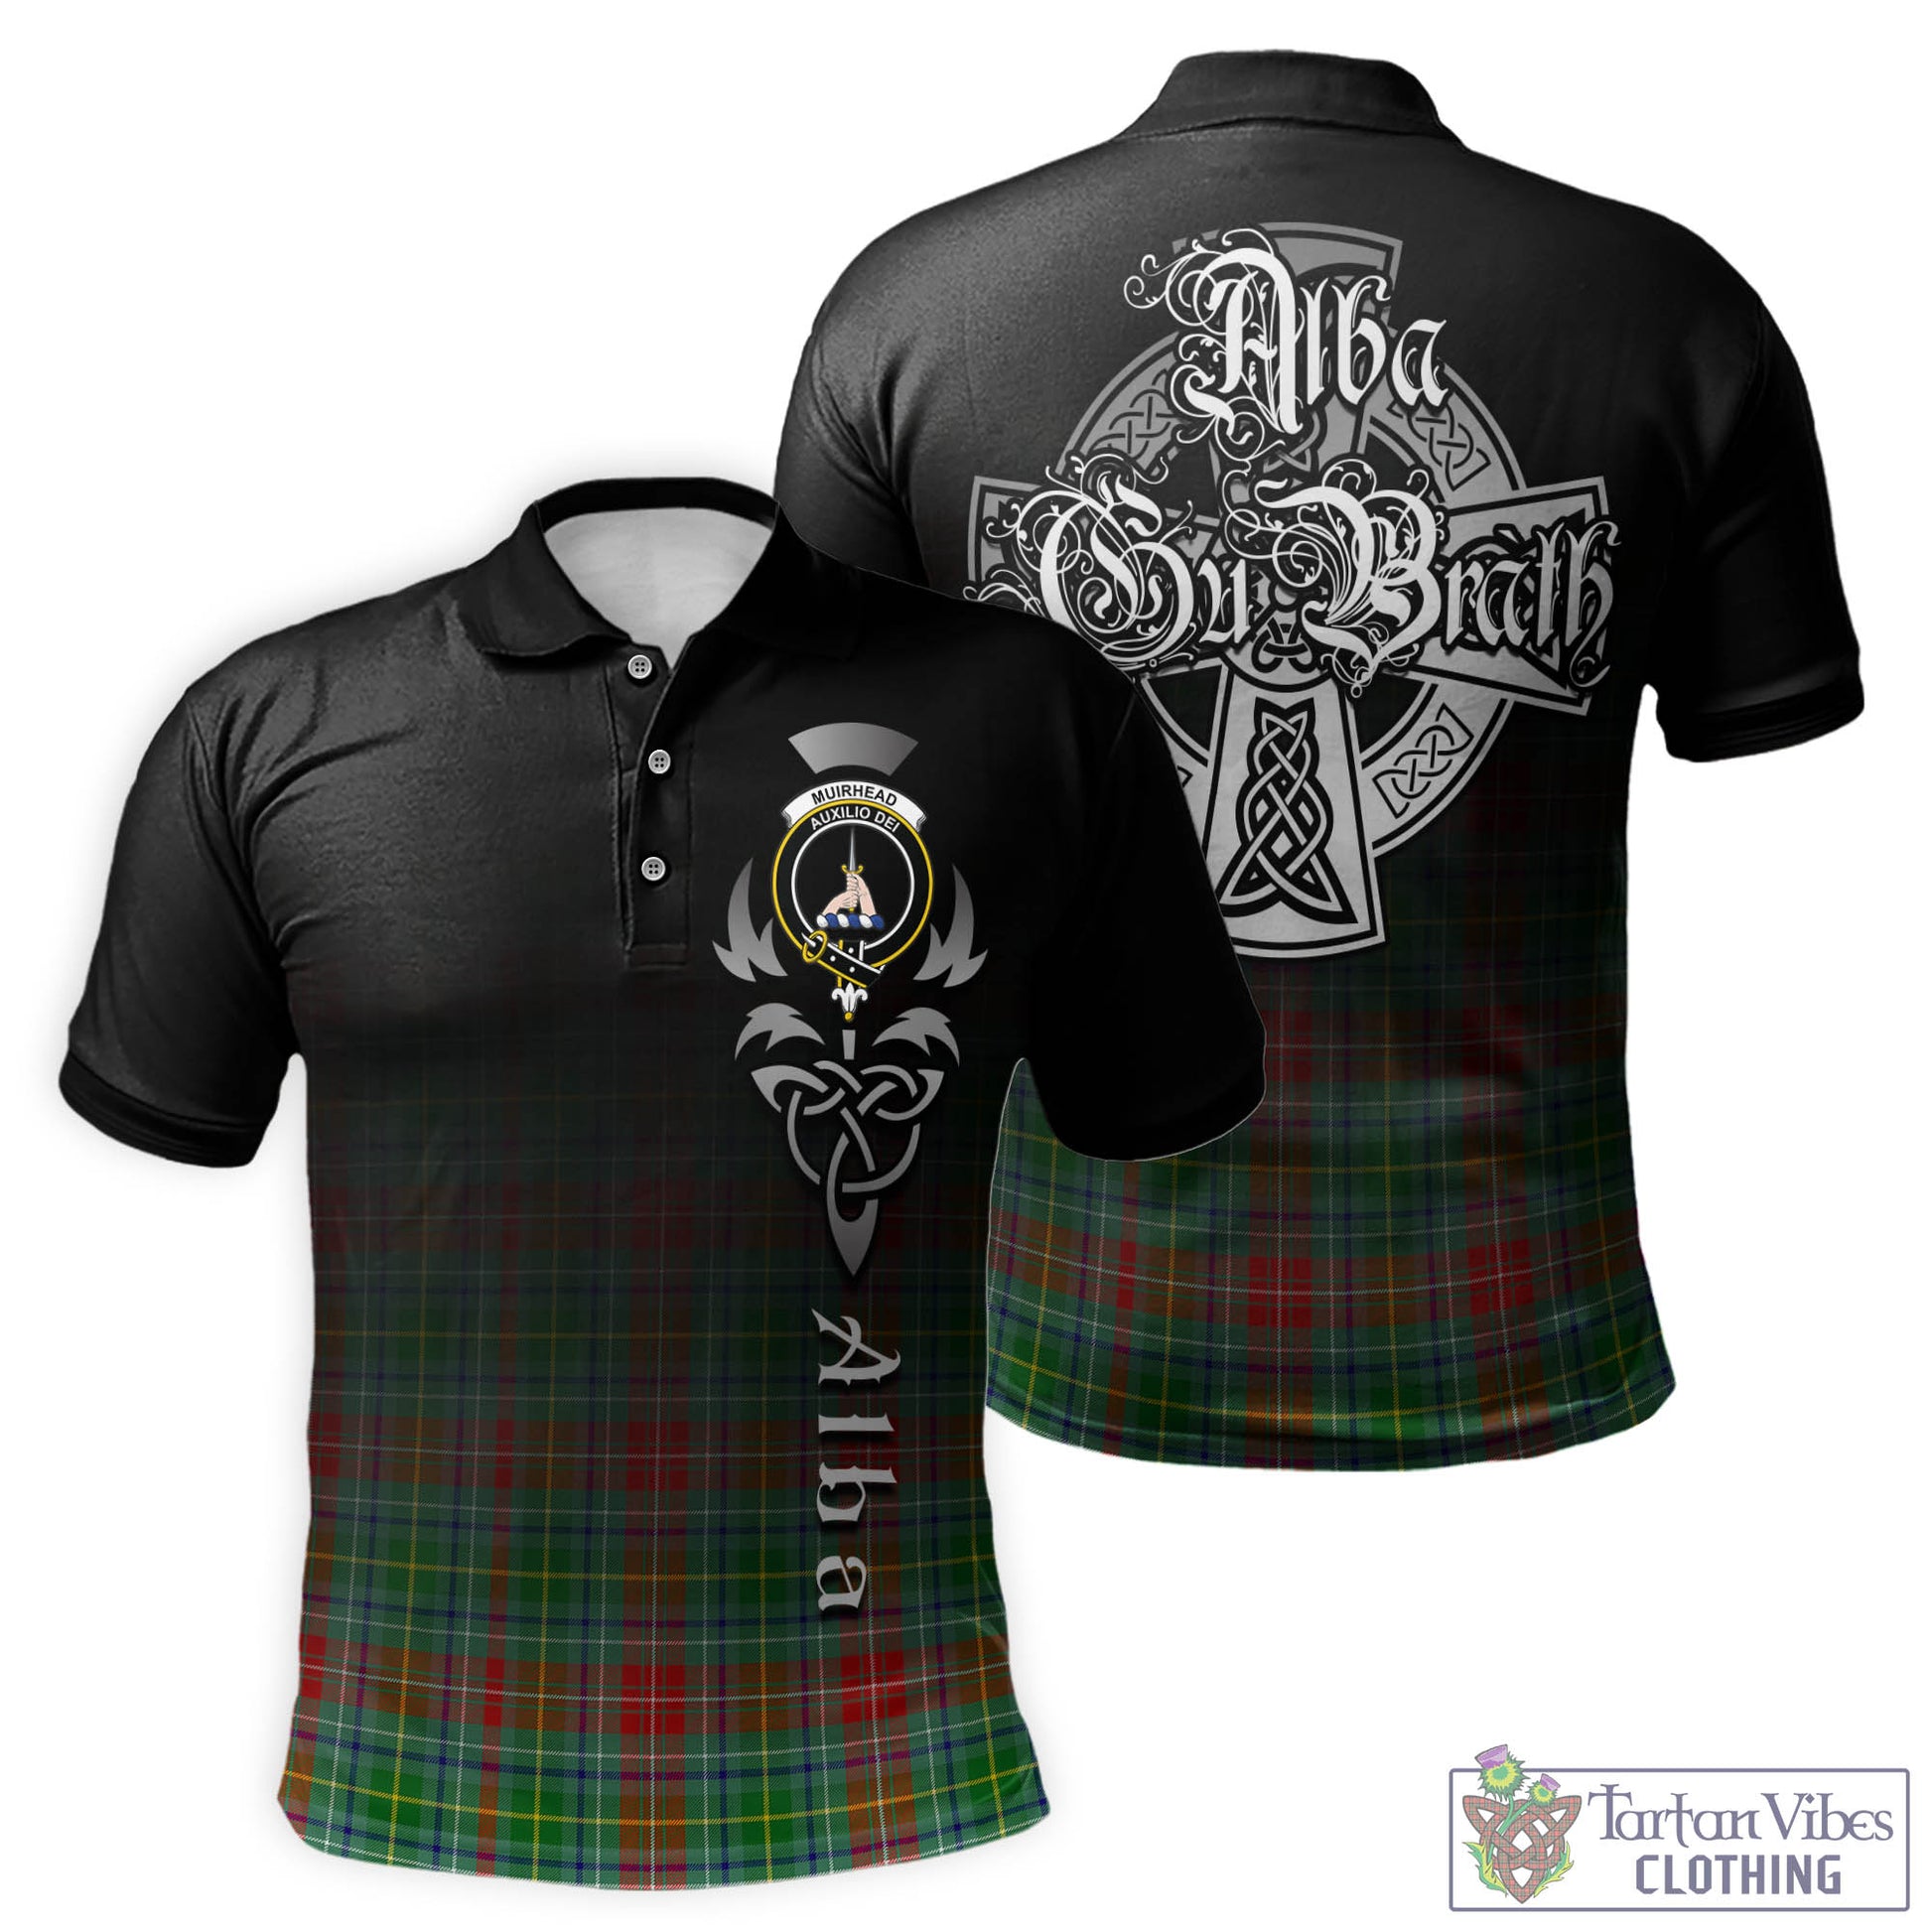 Tartan Vibes Clothing Muirhead Tartan Polo Shirt Featuring Alba Gu Brath Family Crest Celtic Inspired